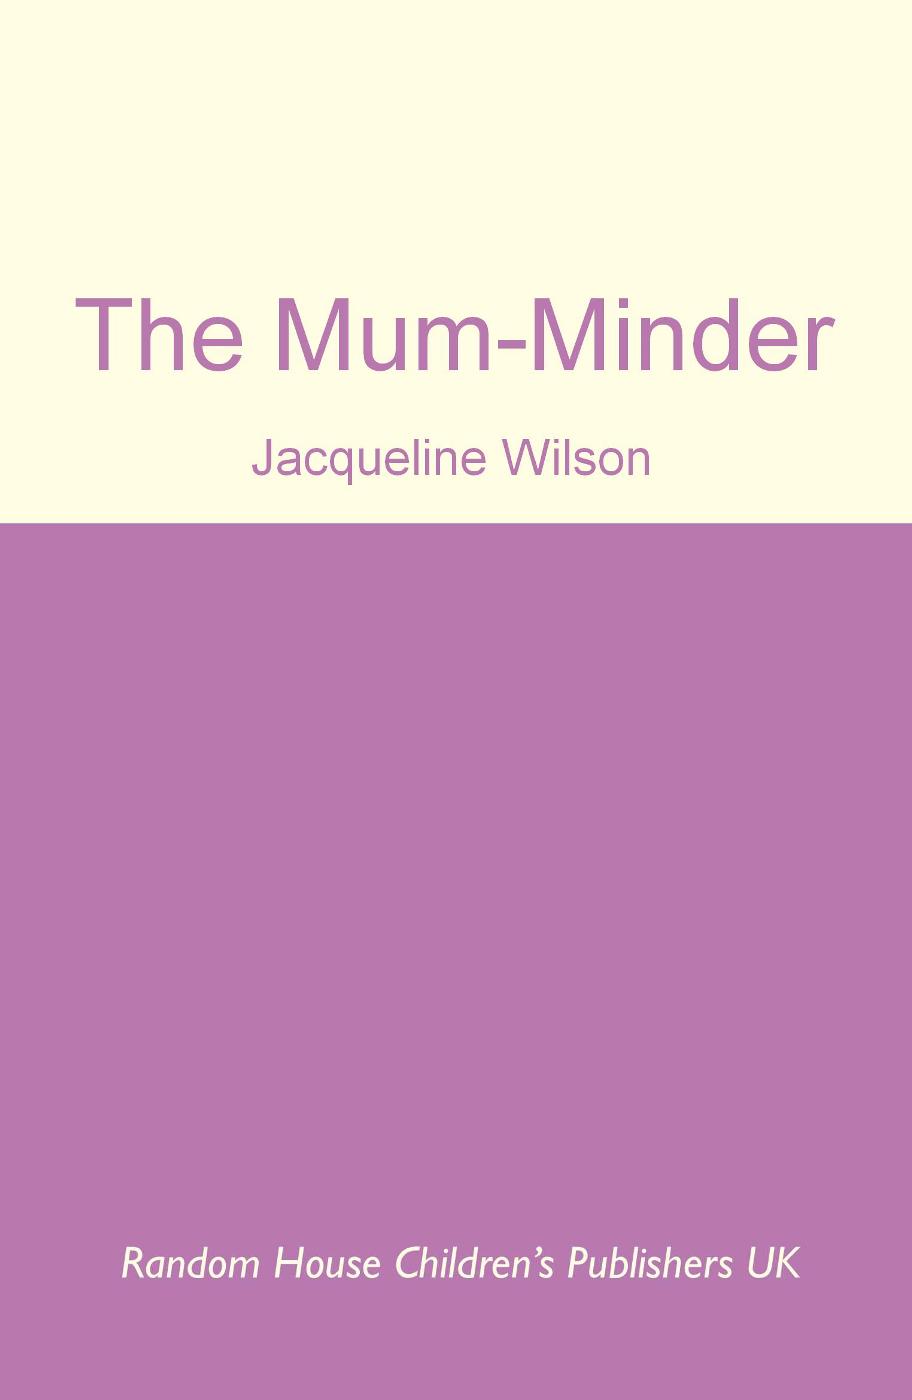 The Mum-Minder (2009) by Jacqueline Wilson